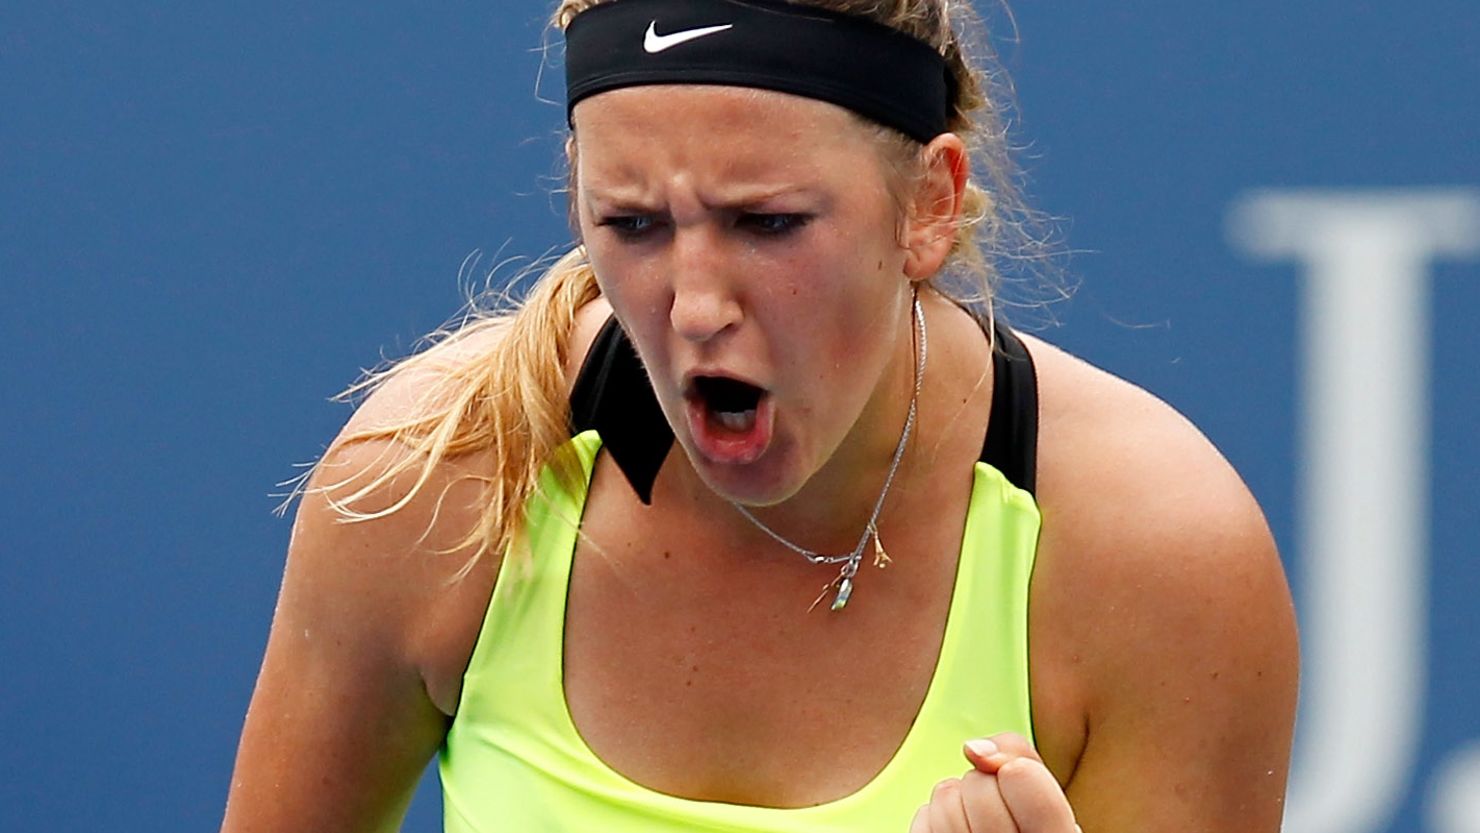 A pumped up Victoria Azarenka saw off defending champion Samantha Stosur in the U.S. Open quarterfinals. 